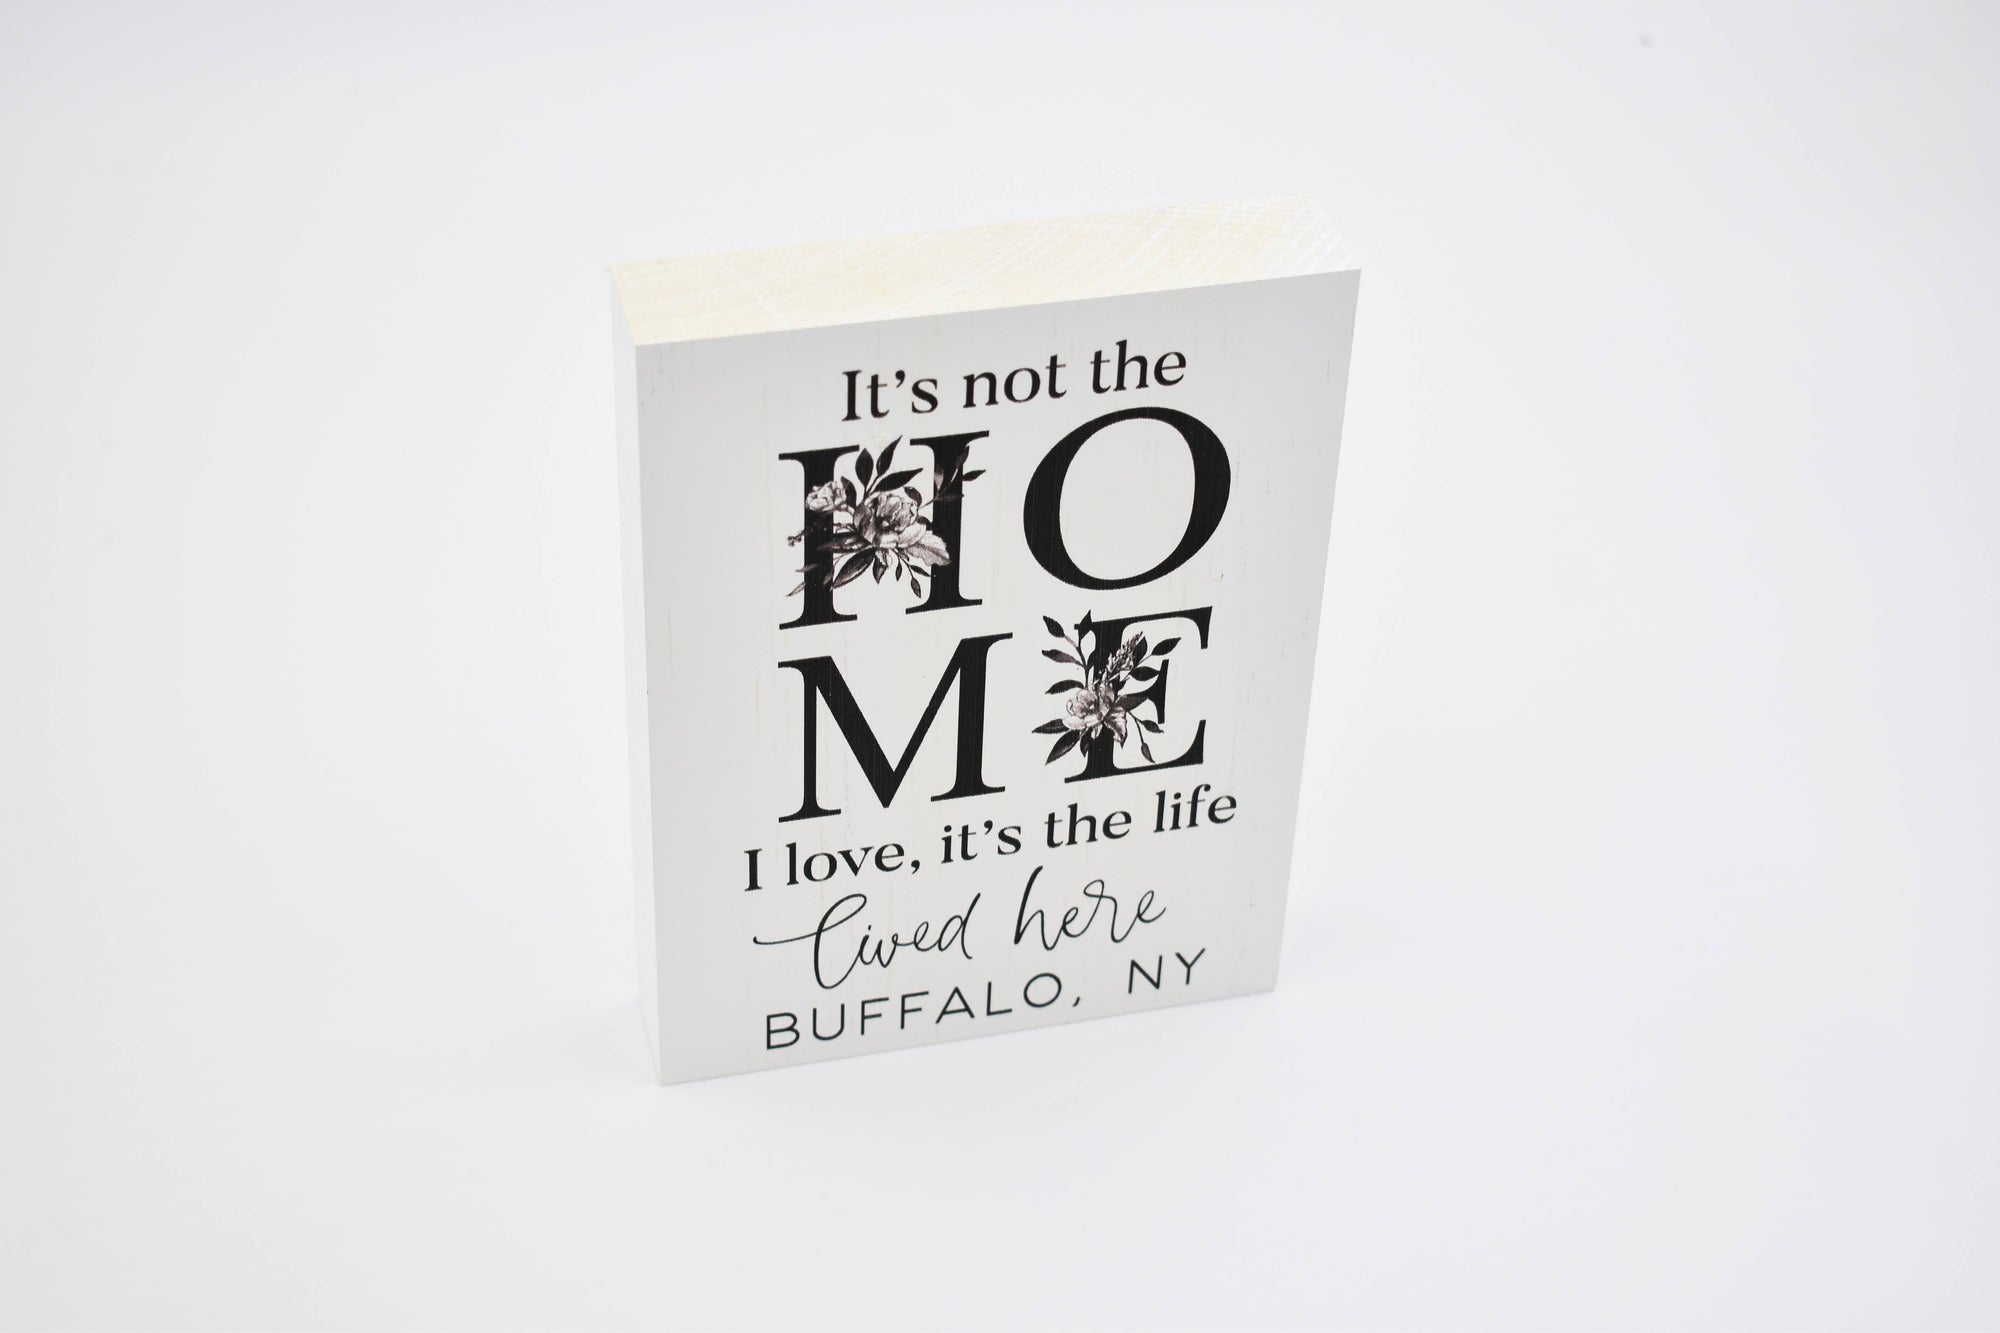 The Life Lived Here Buffalo, NY Wooden Decoration